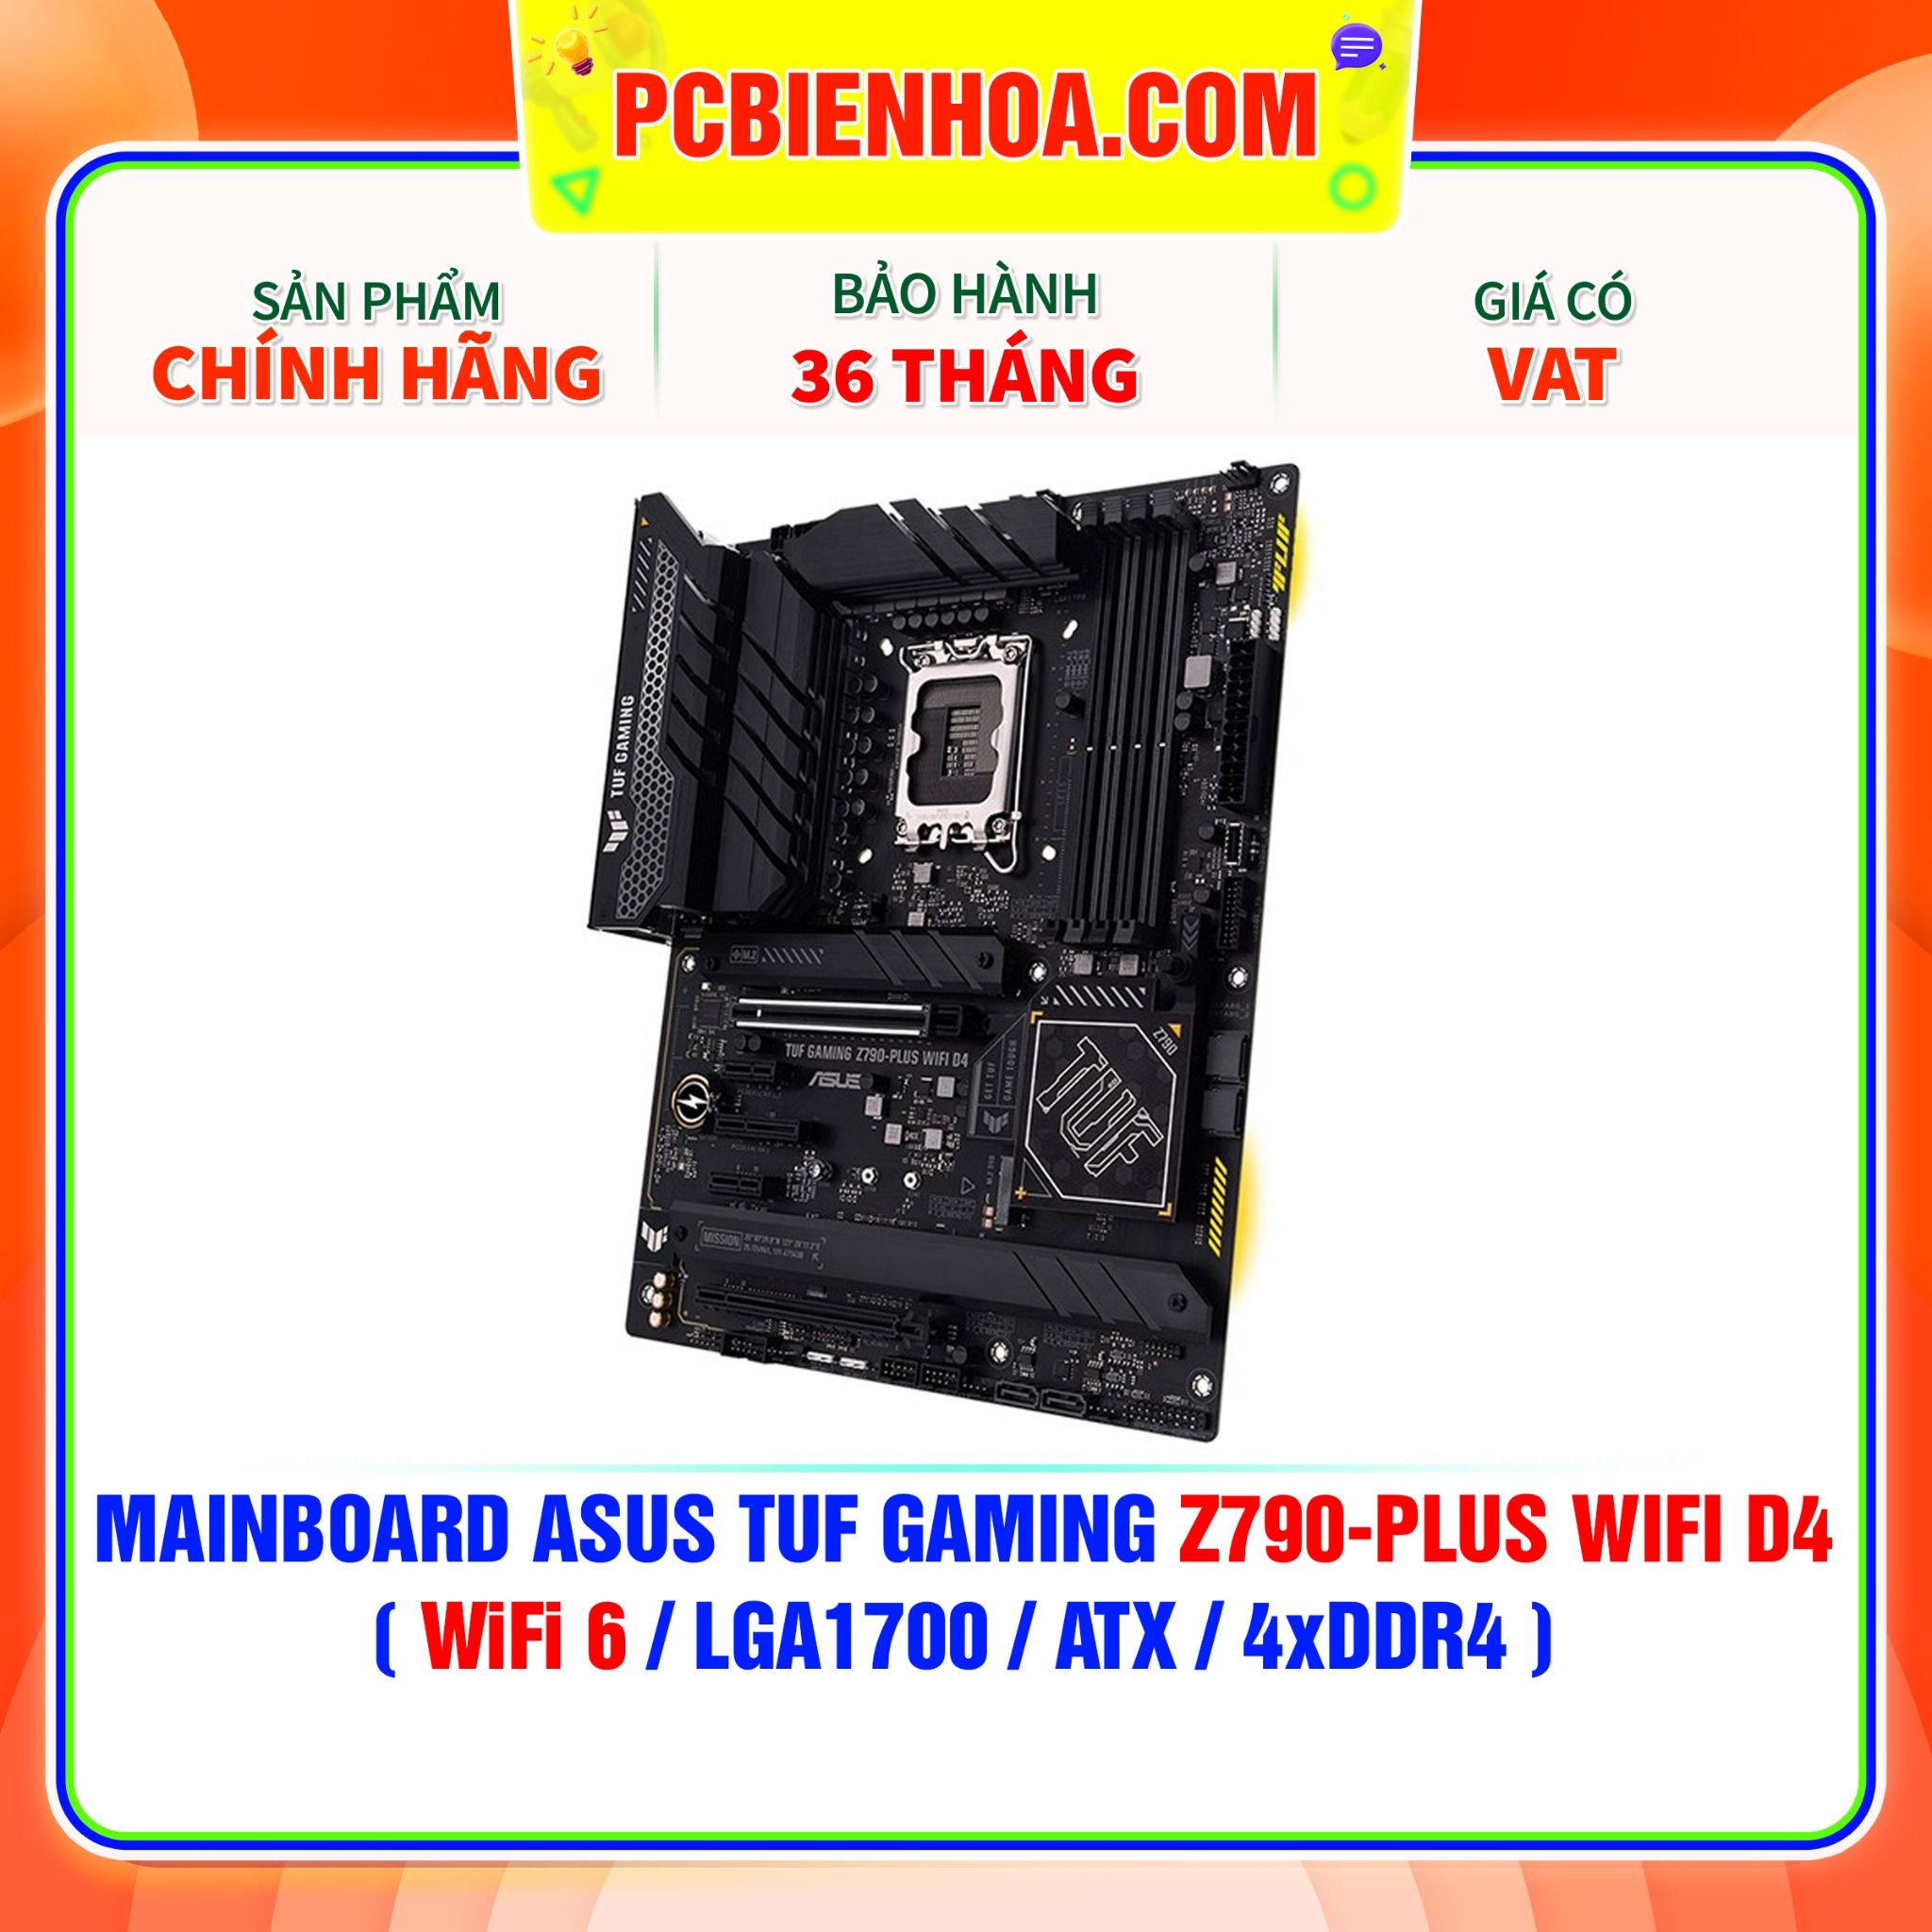  MAINBOARD ASUS TUF GAMING Z790-PLUS WIFI D4 ( WiFi 6 / LGA1700 / ATX / 4xDDR4 ) 